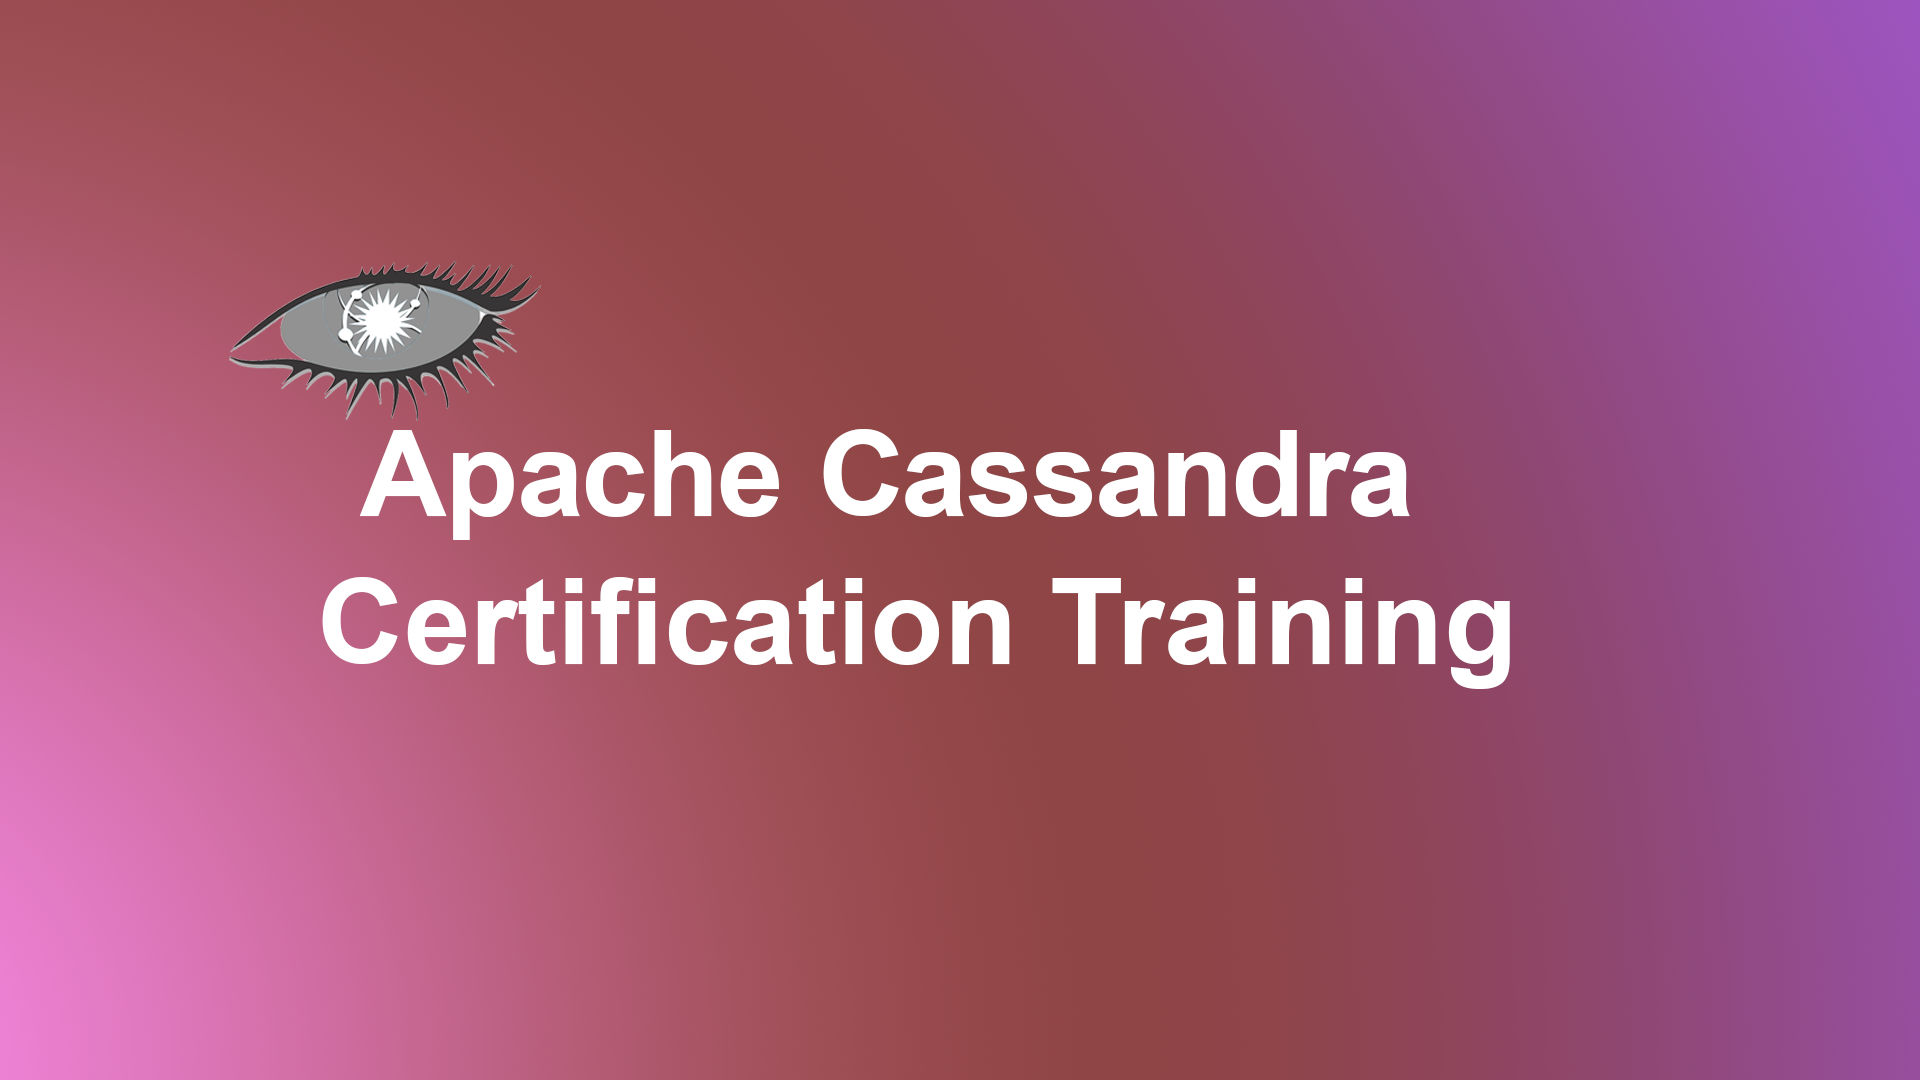 Apache Cassandra Certification Training